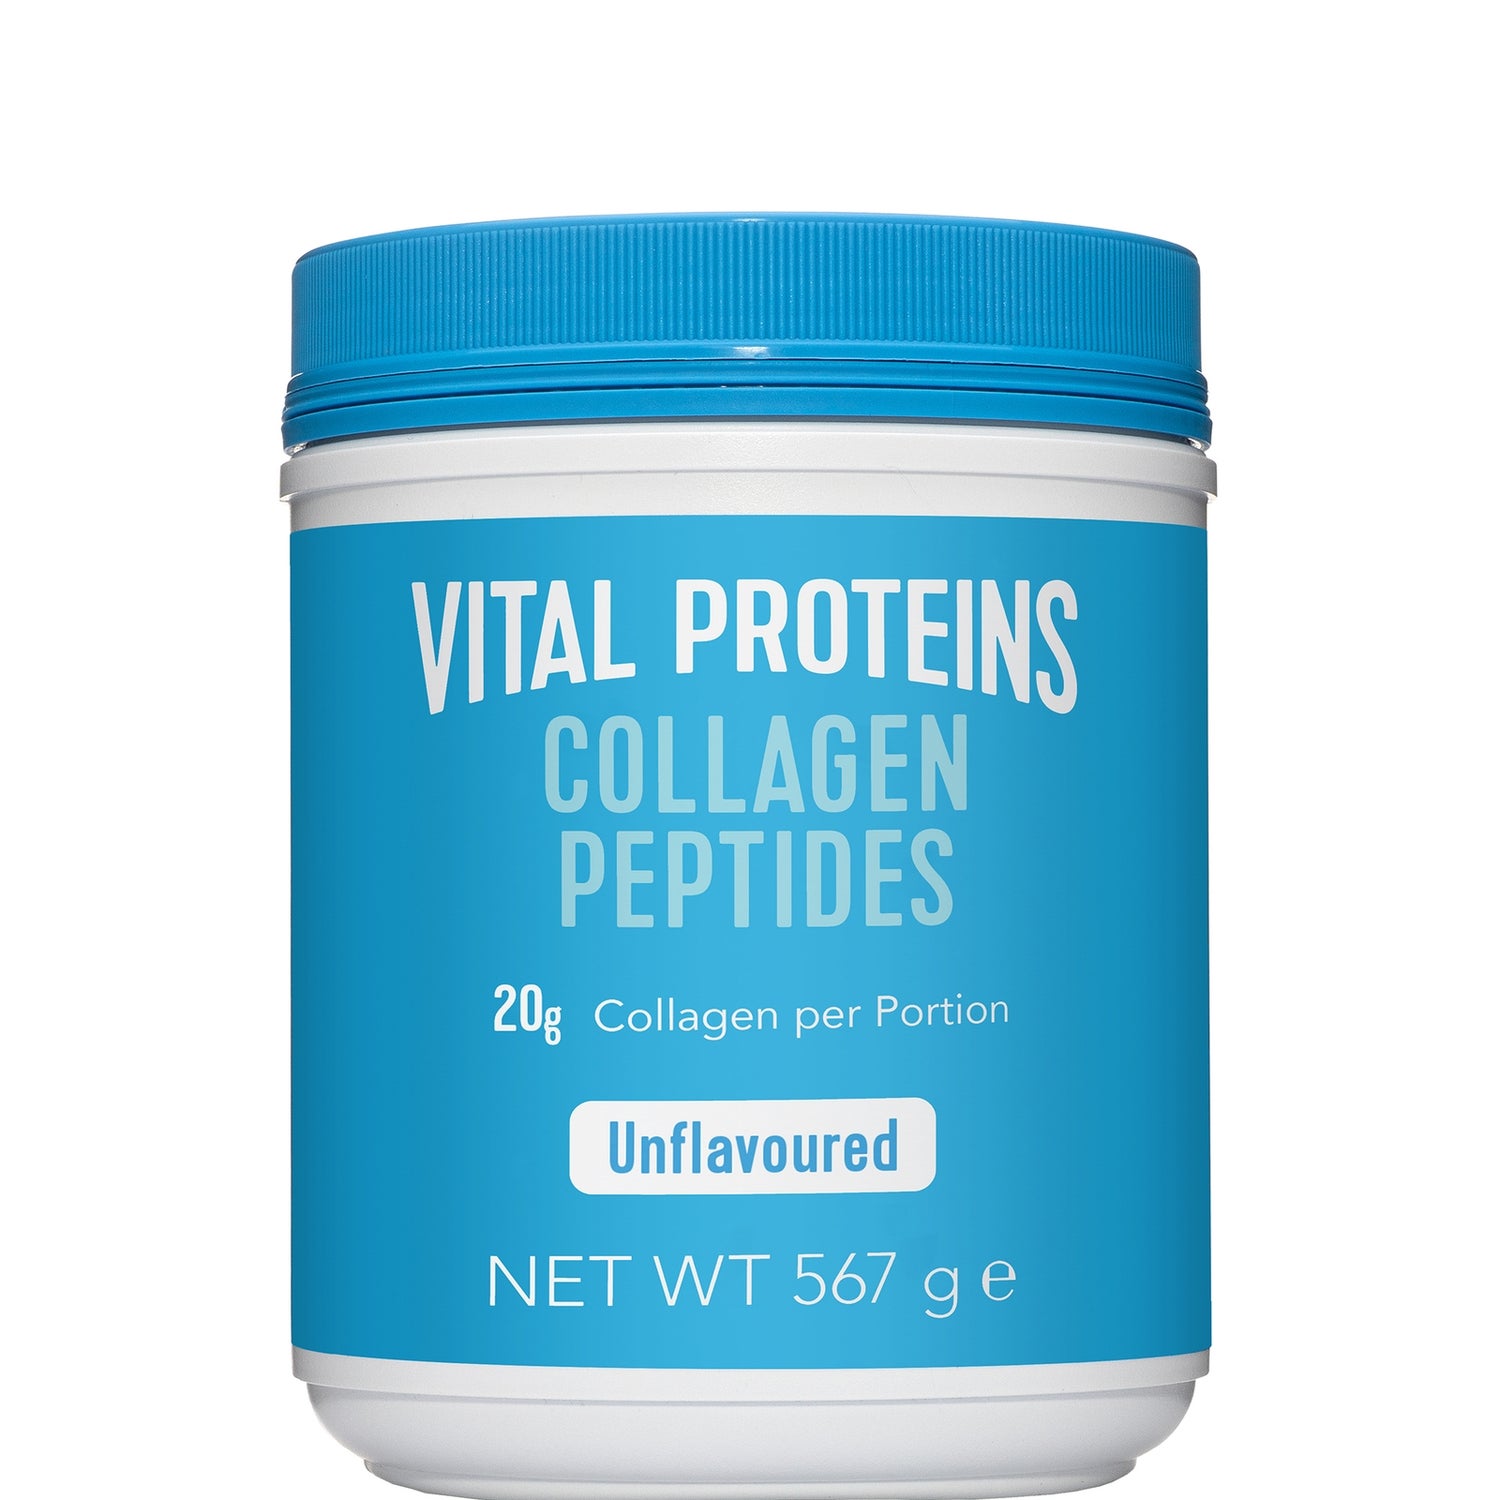 Vital Proteins® Collagen Peptides 567g - Unflavored